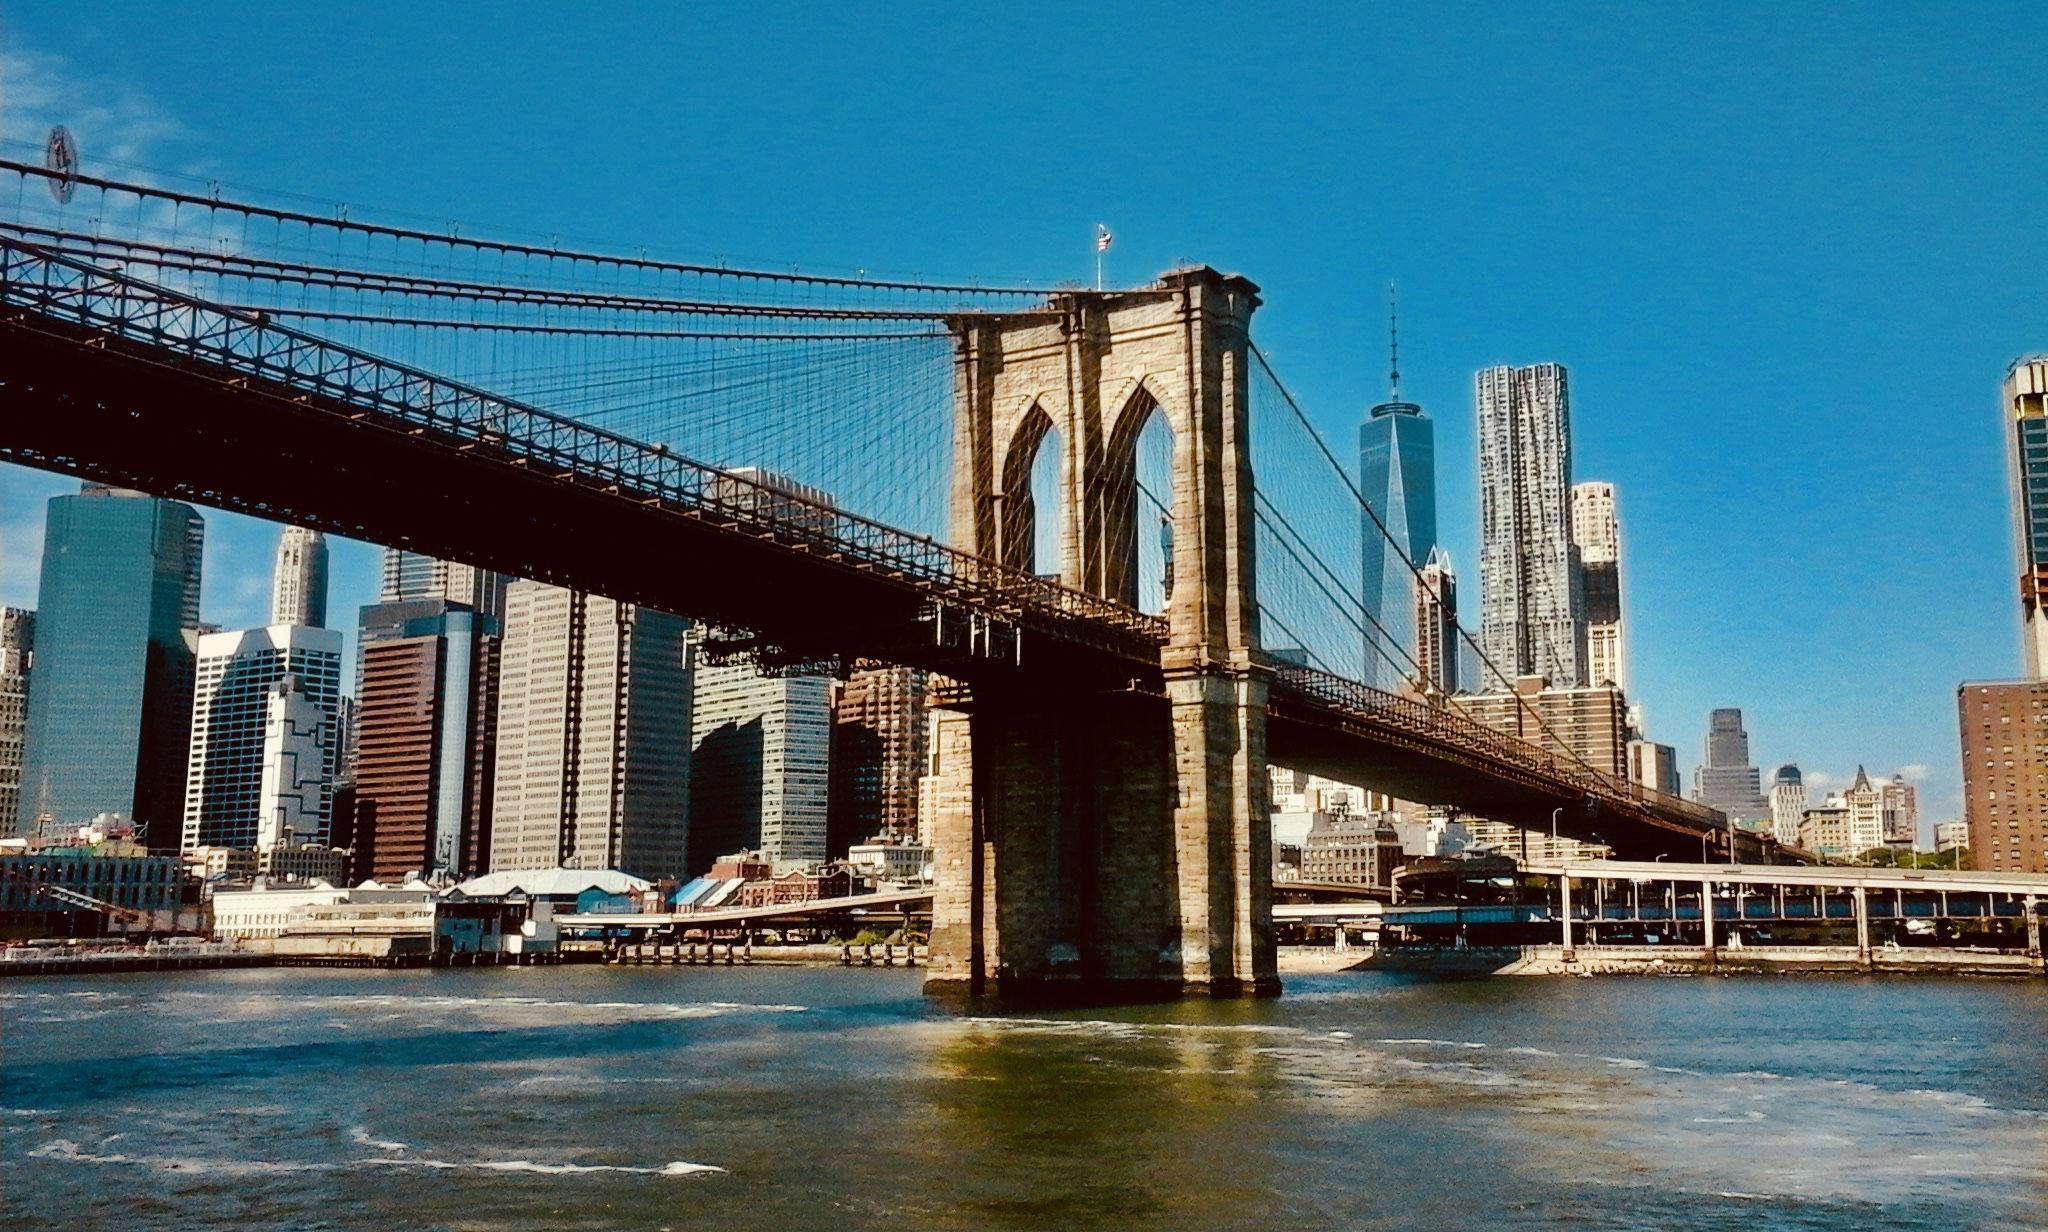 500 Brooklyn Bridge Pictures  Download Free Images on Unsplash